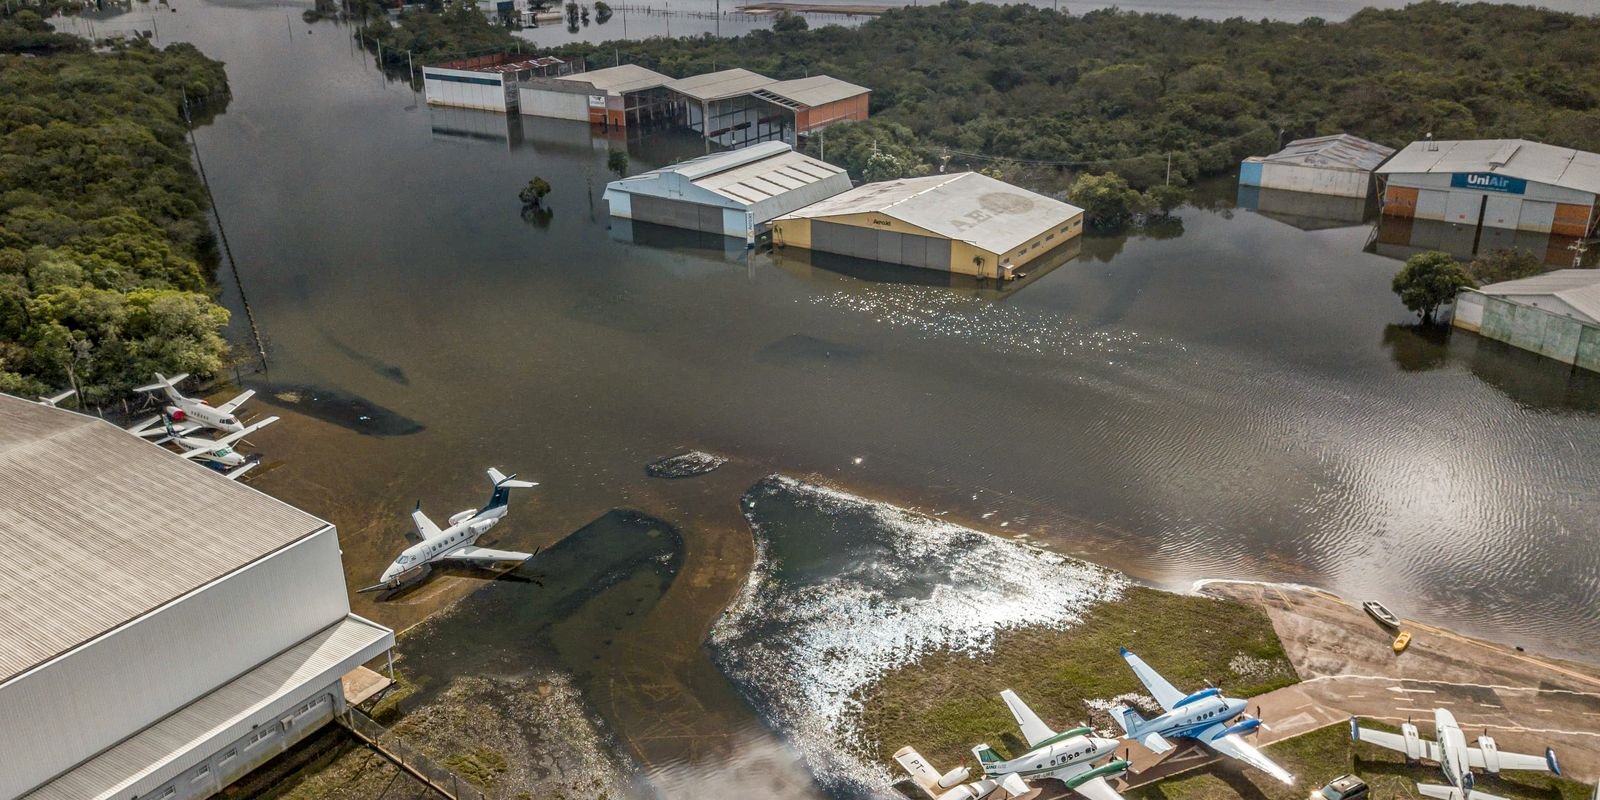 Aeroporto Salgado Filho deve reabrir na segunda quinzena de dezembro